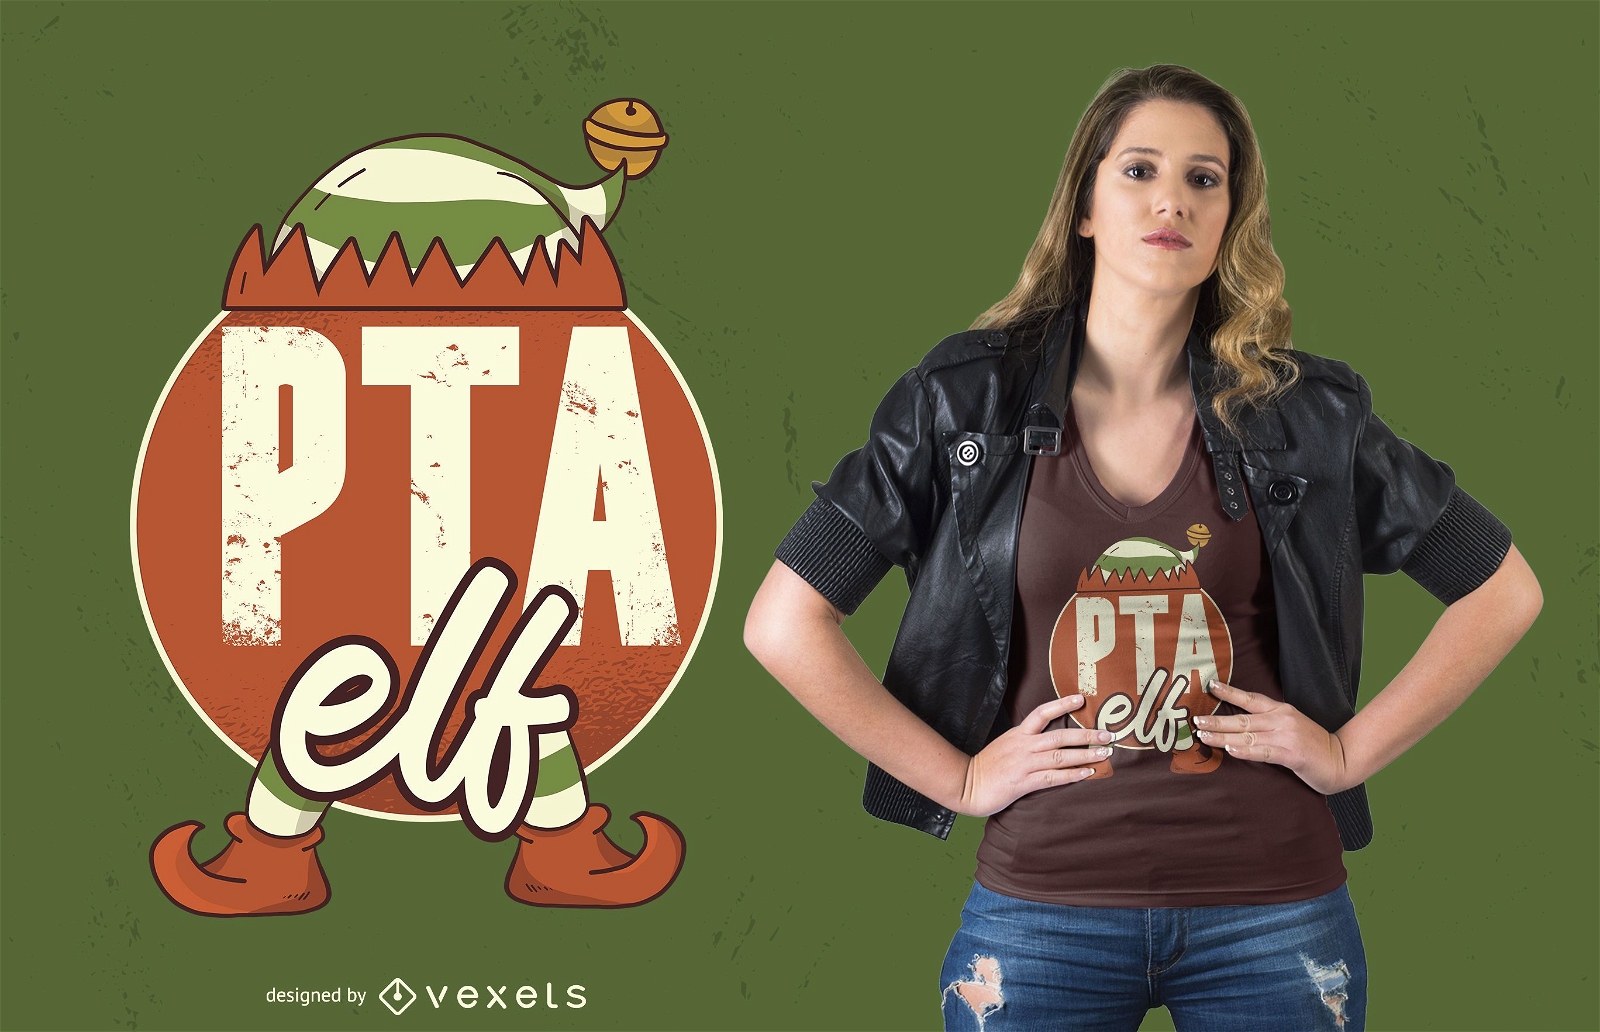 PTA elf t-shirt design